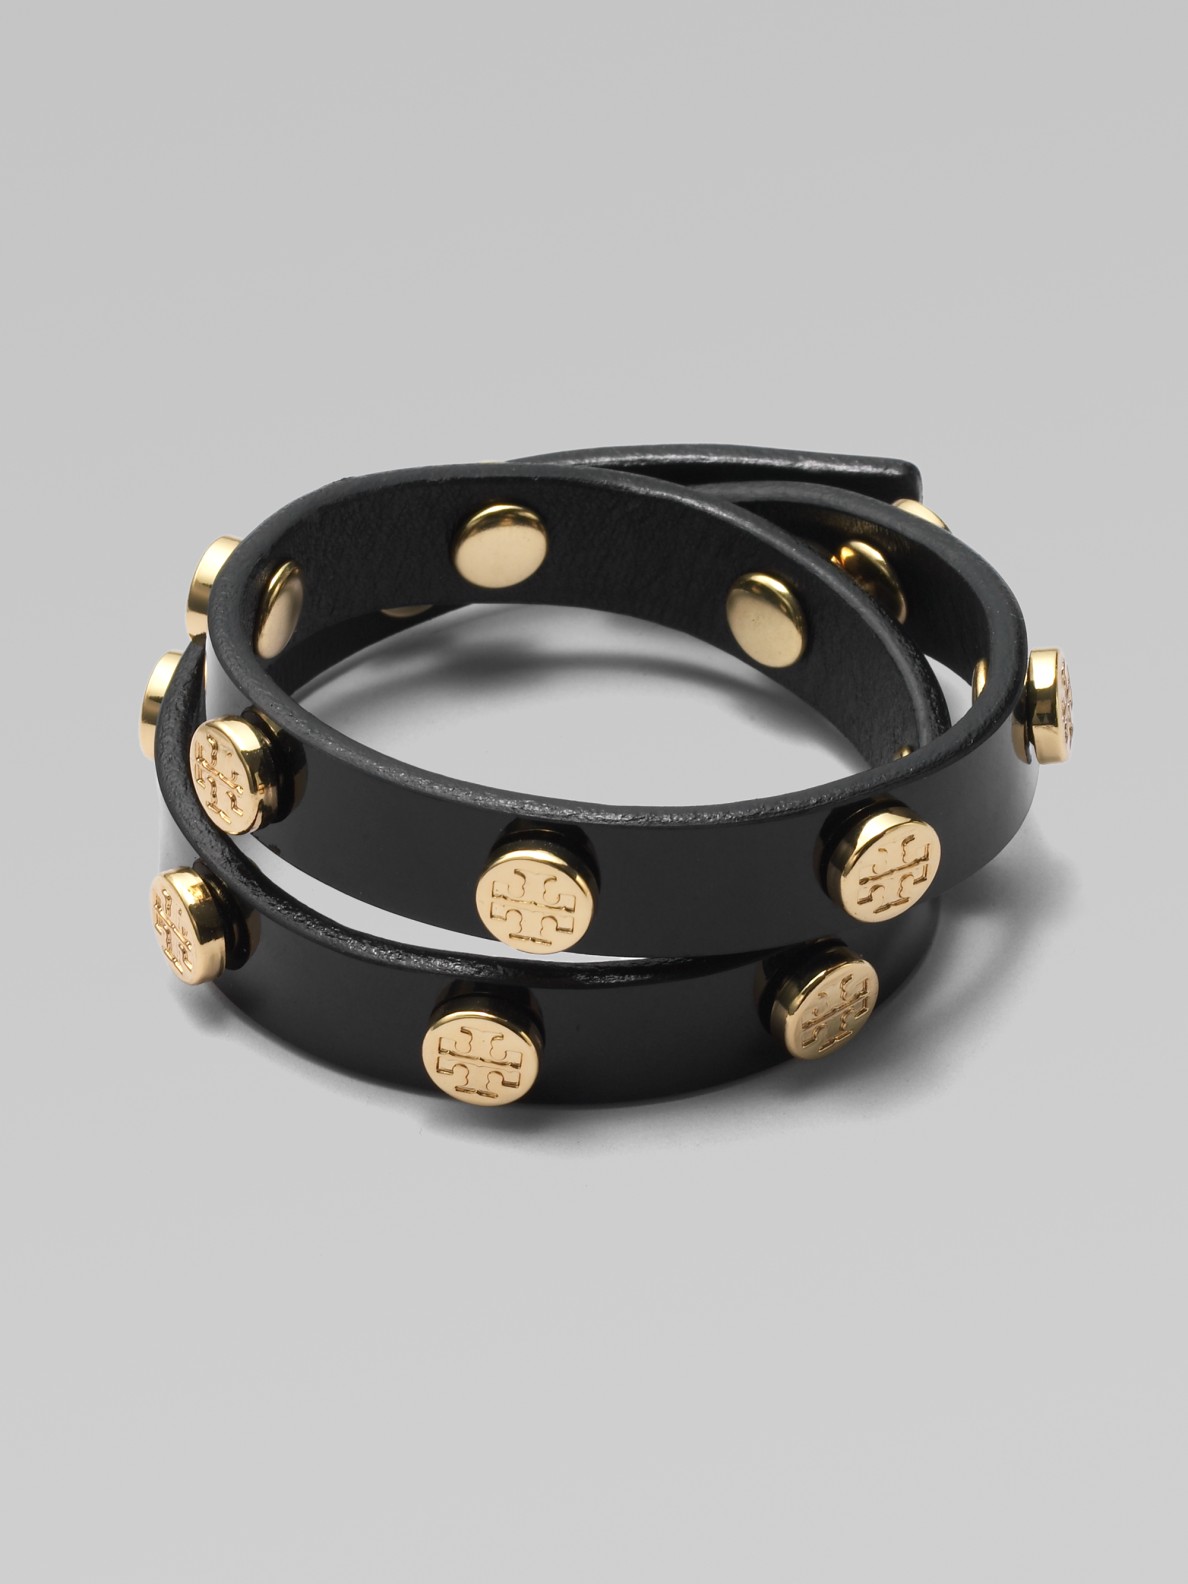 Arriba 55+ imagen tory burch black leather wrap bracelet